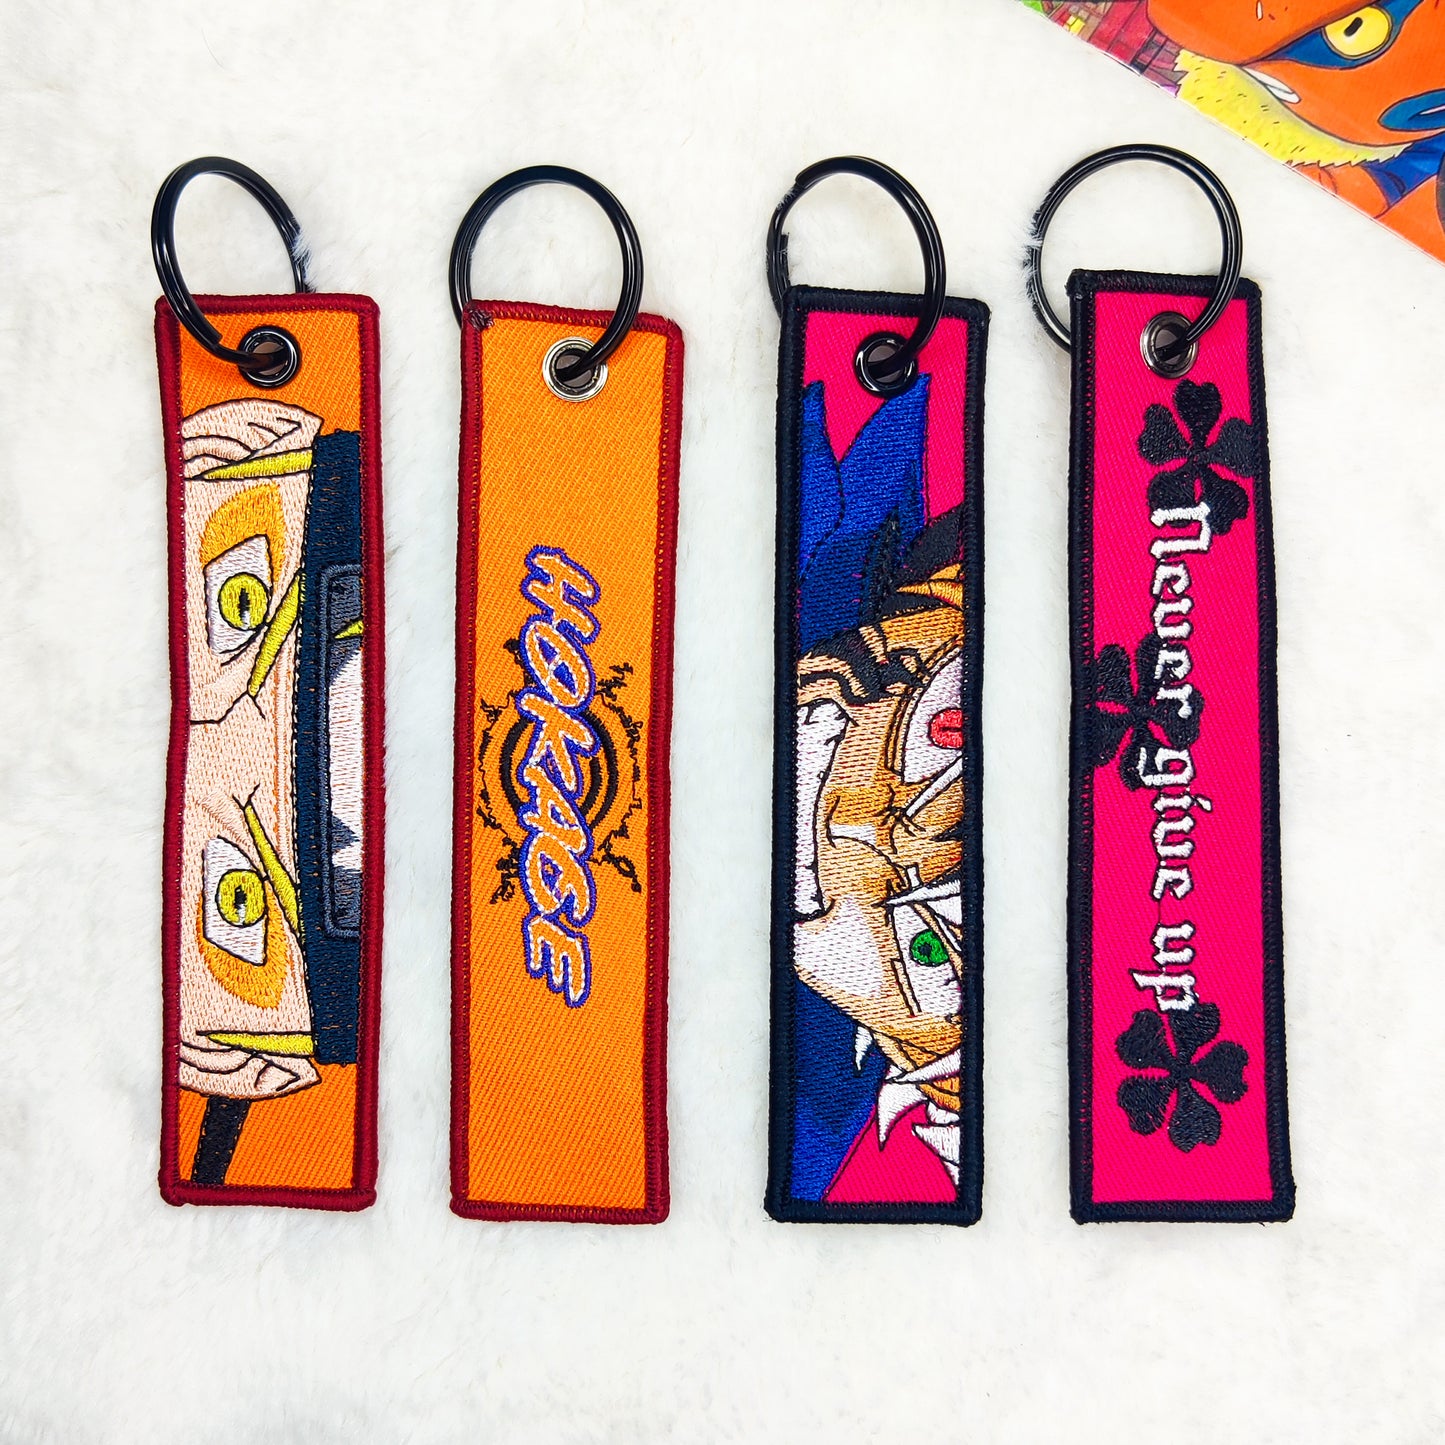 Japanese Anime Embroidery Fabric Tags for bags, Keys, Bike Keychain